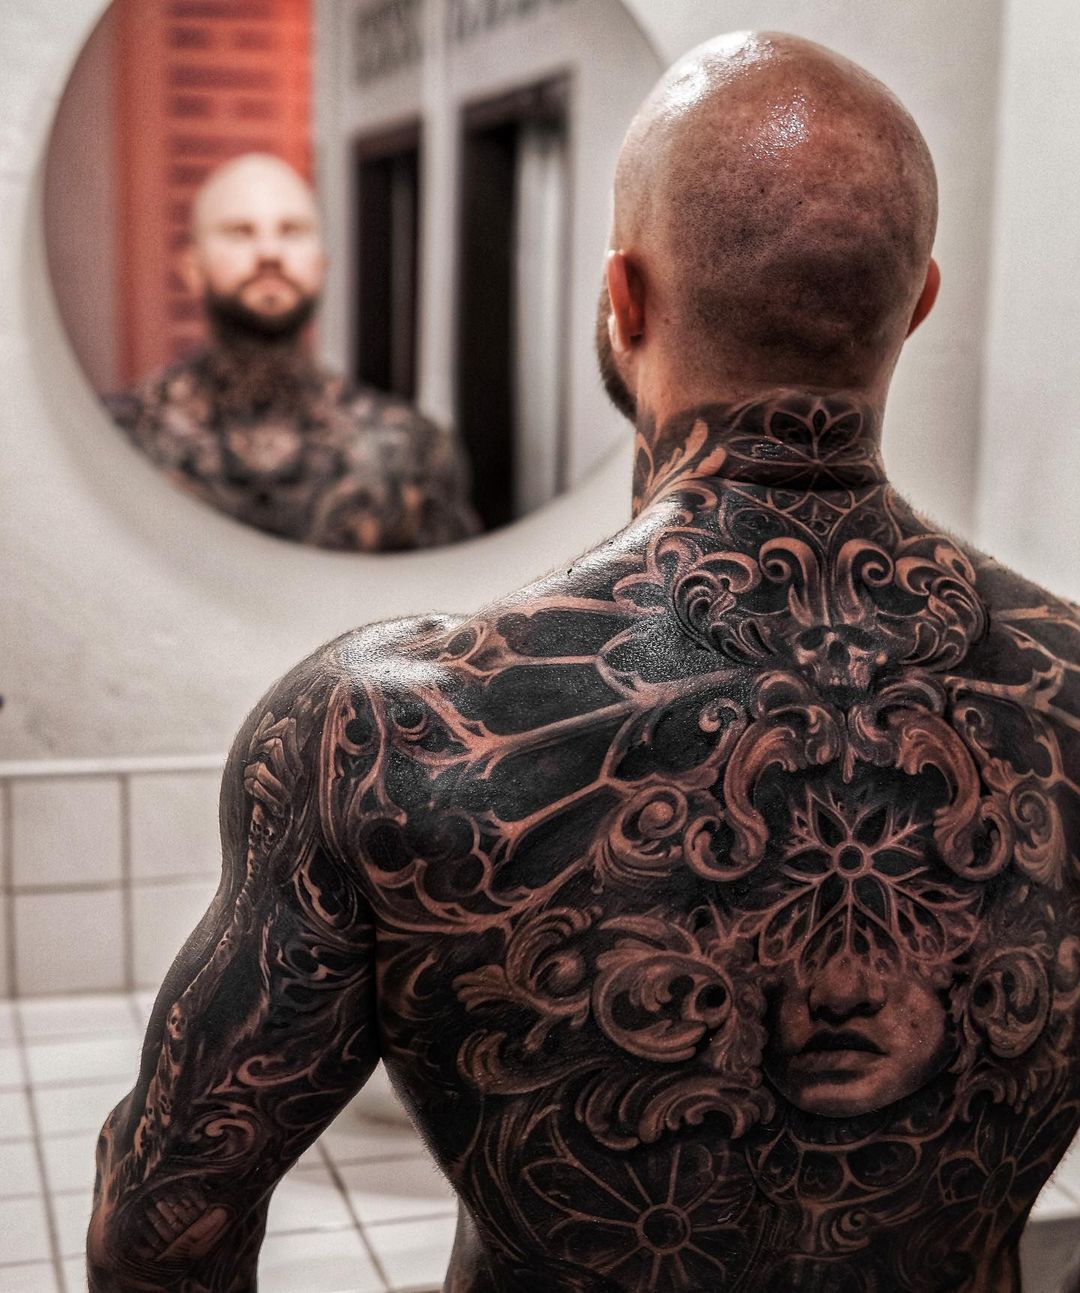 41-day tattoo marathon in Thailand of the American bodybuilder | iNKPPL